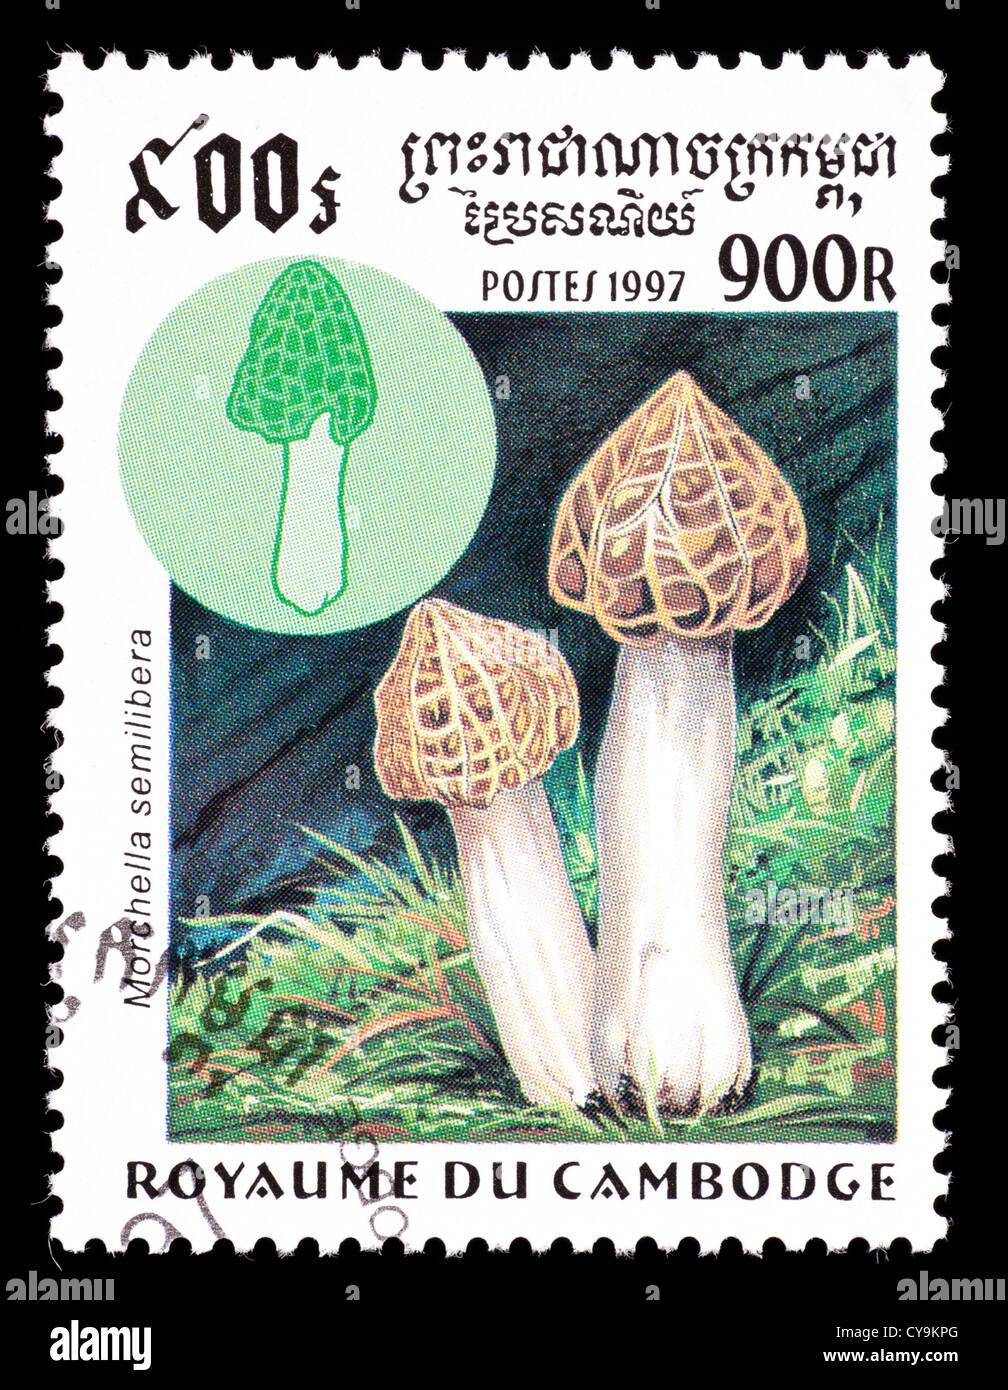 Postage stamp from Cambodia depicting half-free morel mushrooms (Morchella semilibera) Stock Photo